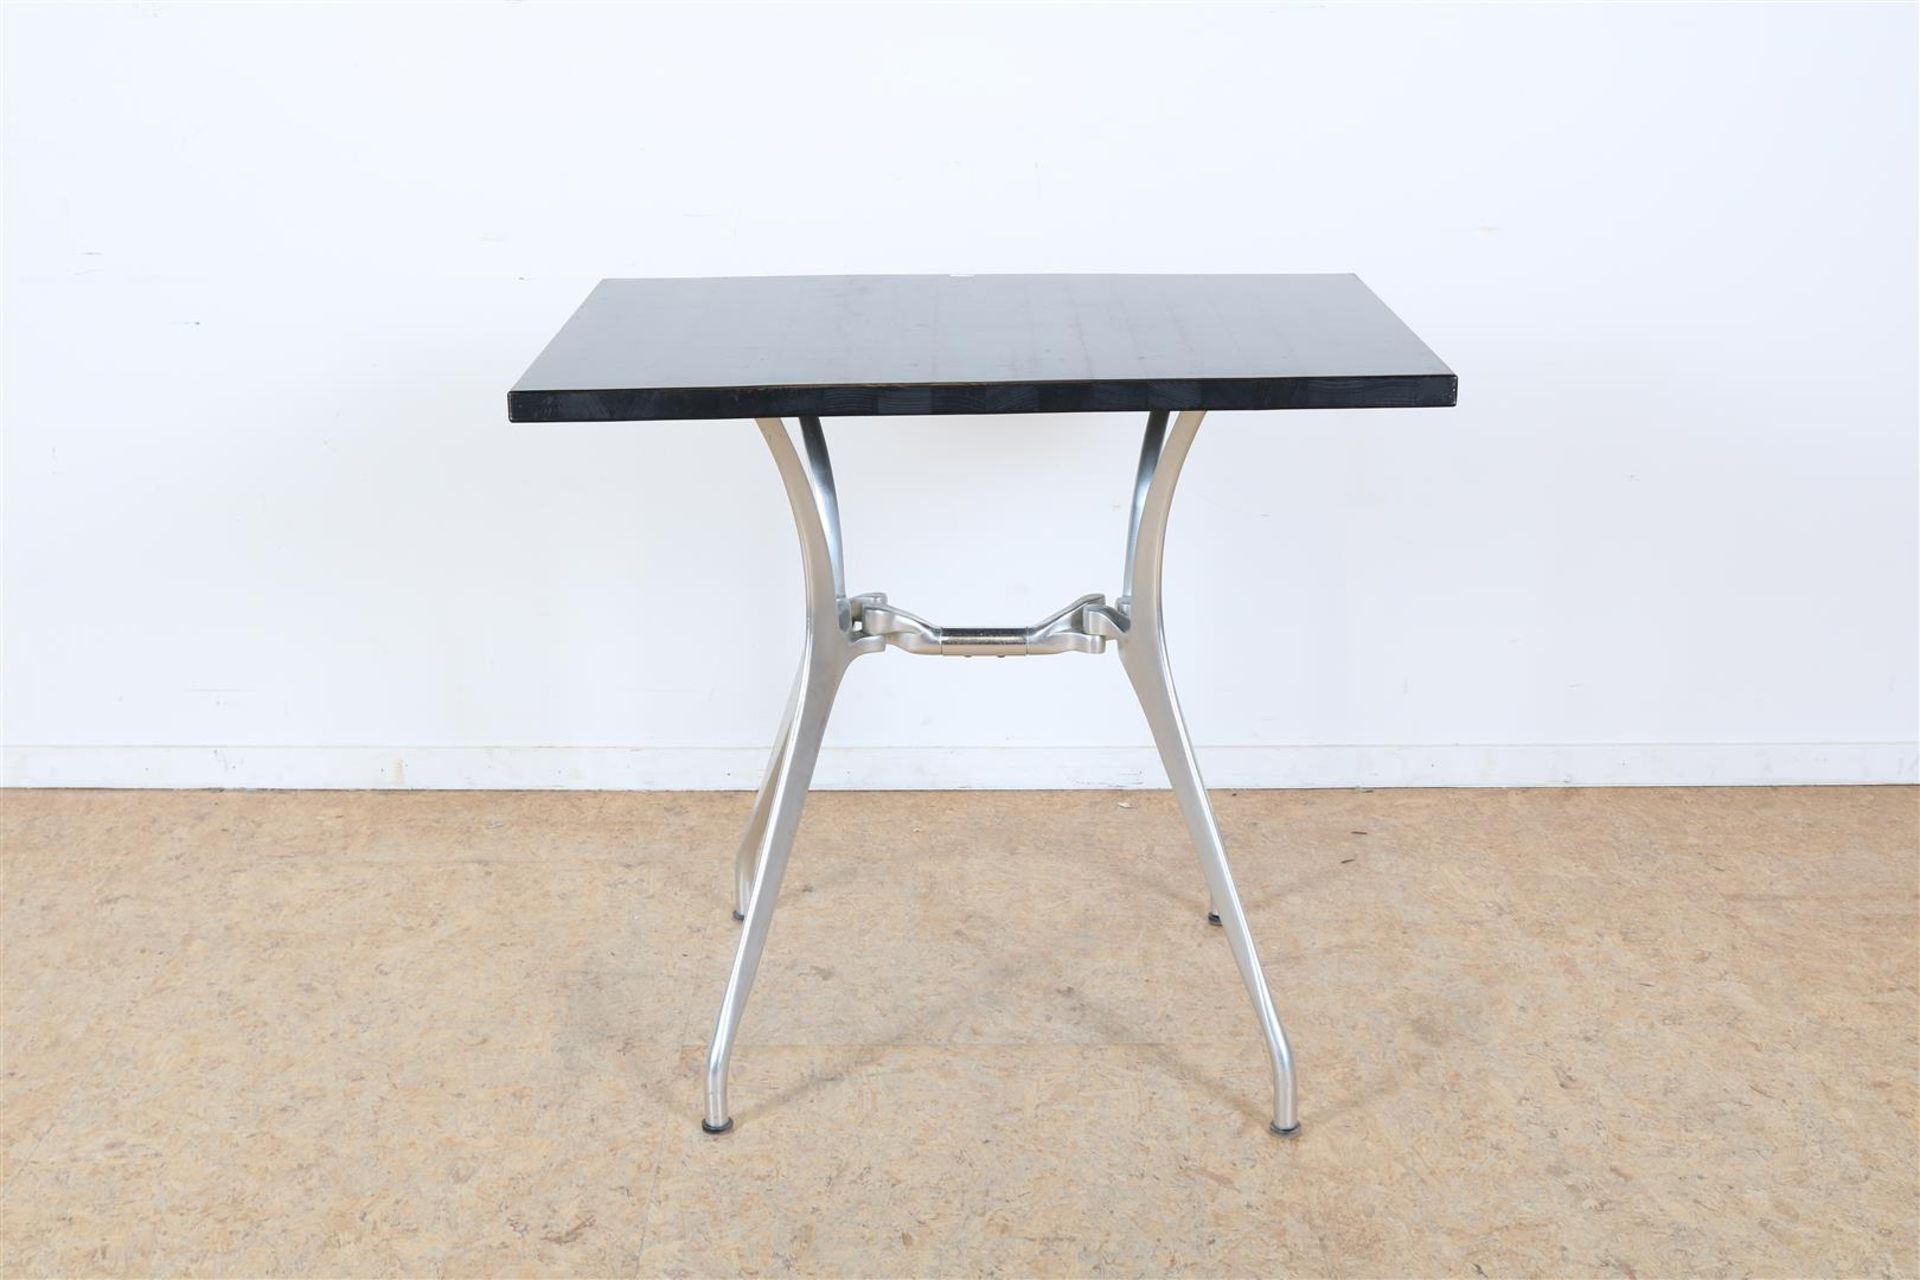 Satellite Breda bistro tables on aluminum base, h. 73, bro. 80, d. 60 cm. - Image 2 of 4